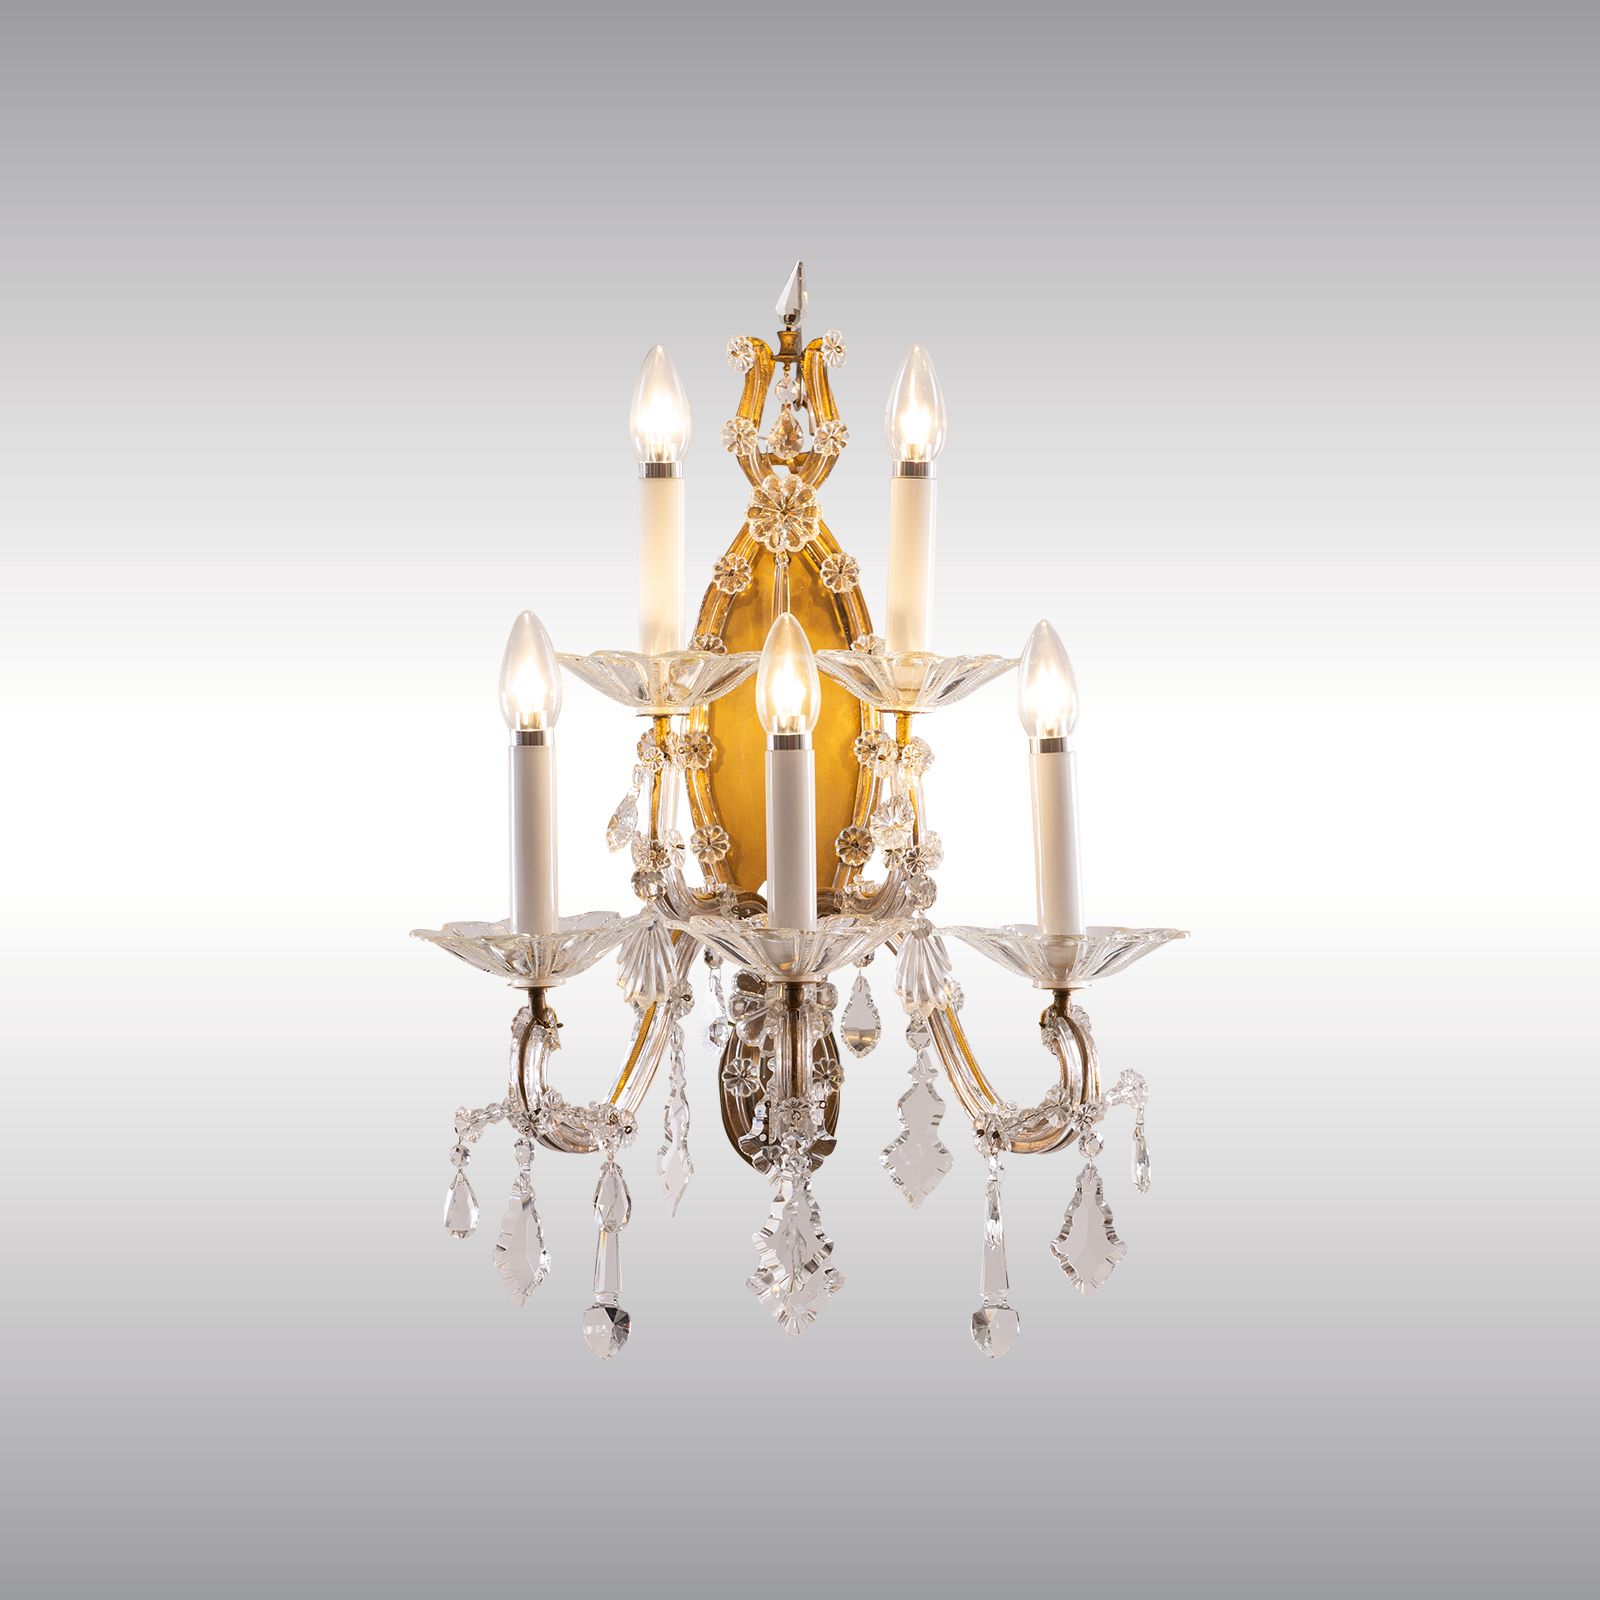 WOKA LAMPS VIENNA - OrderNr.: 44027|Baroque Style 1880 Maria Theresia Sconces, pair of